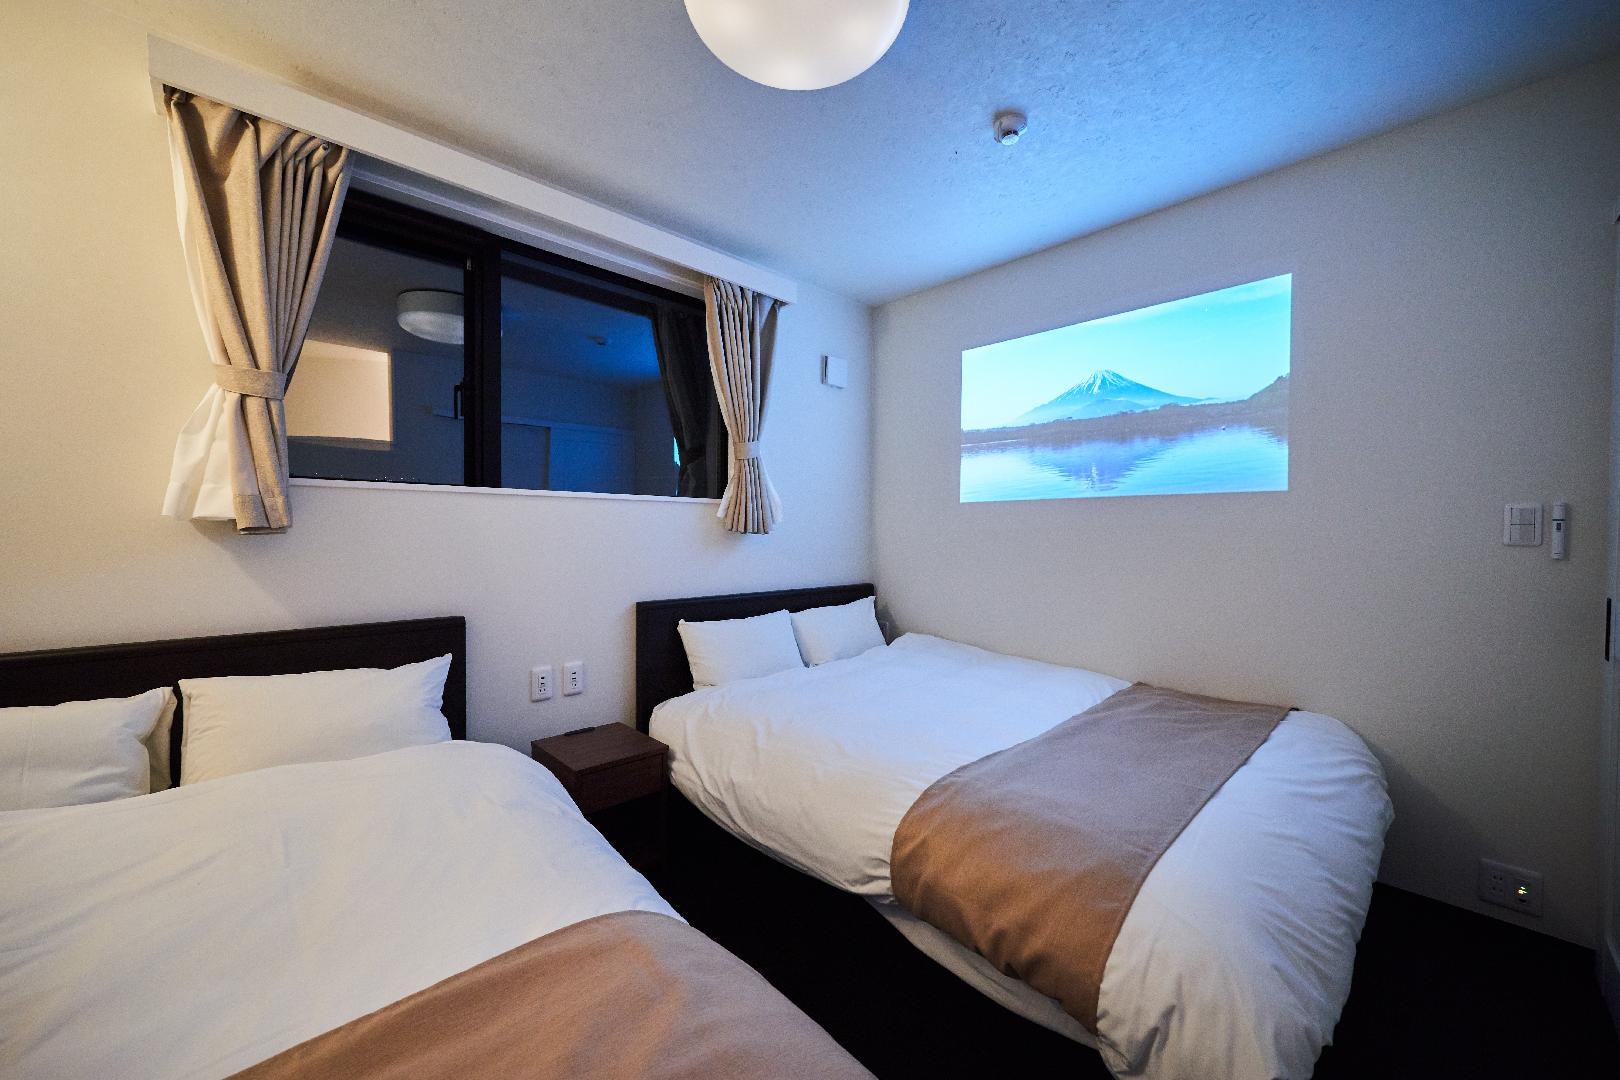 Hotel information and reservations for Rakuten Stay Villa Fuji